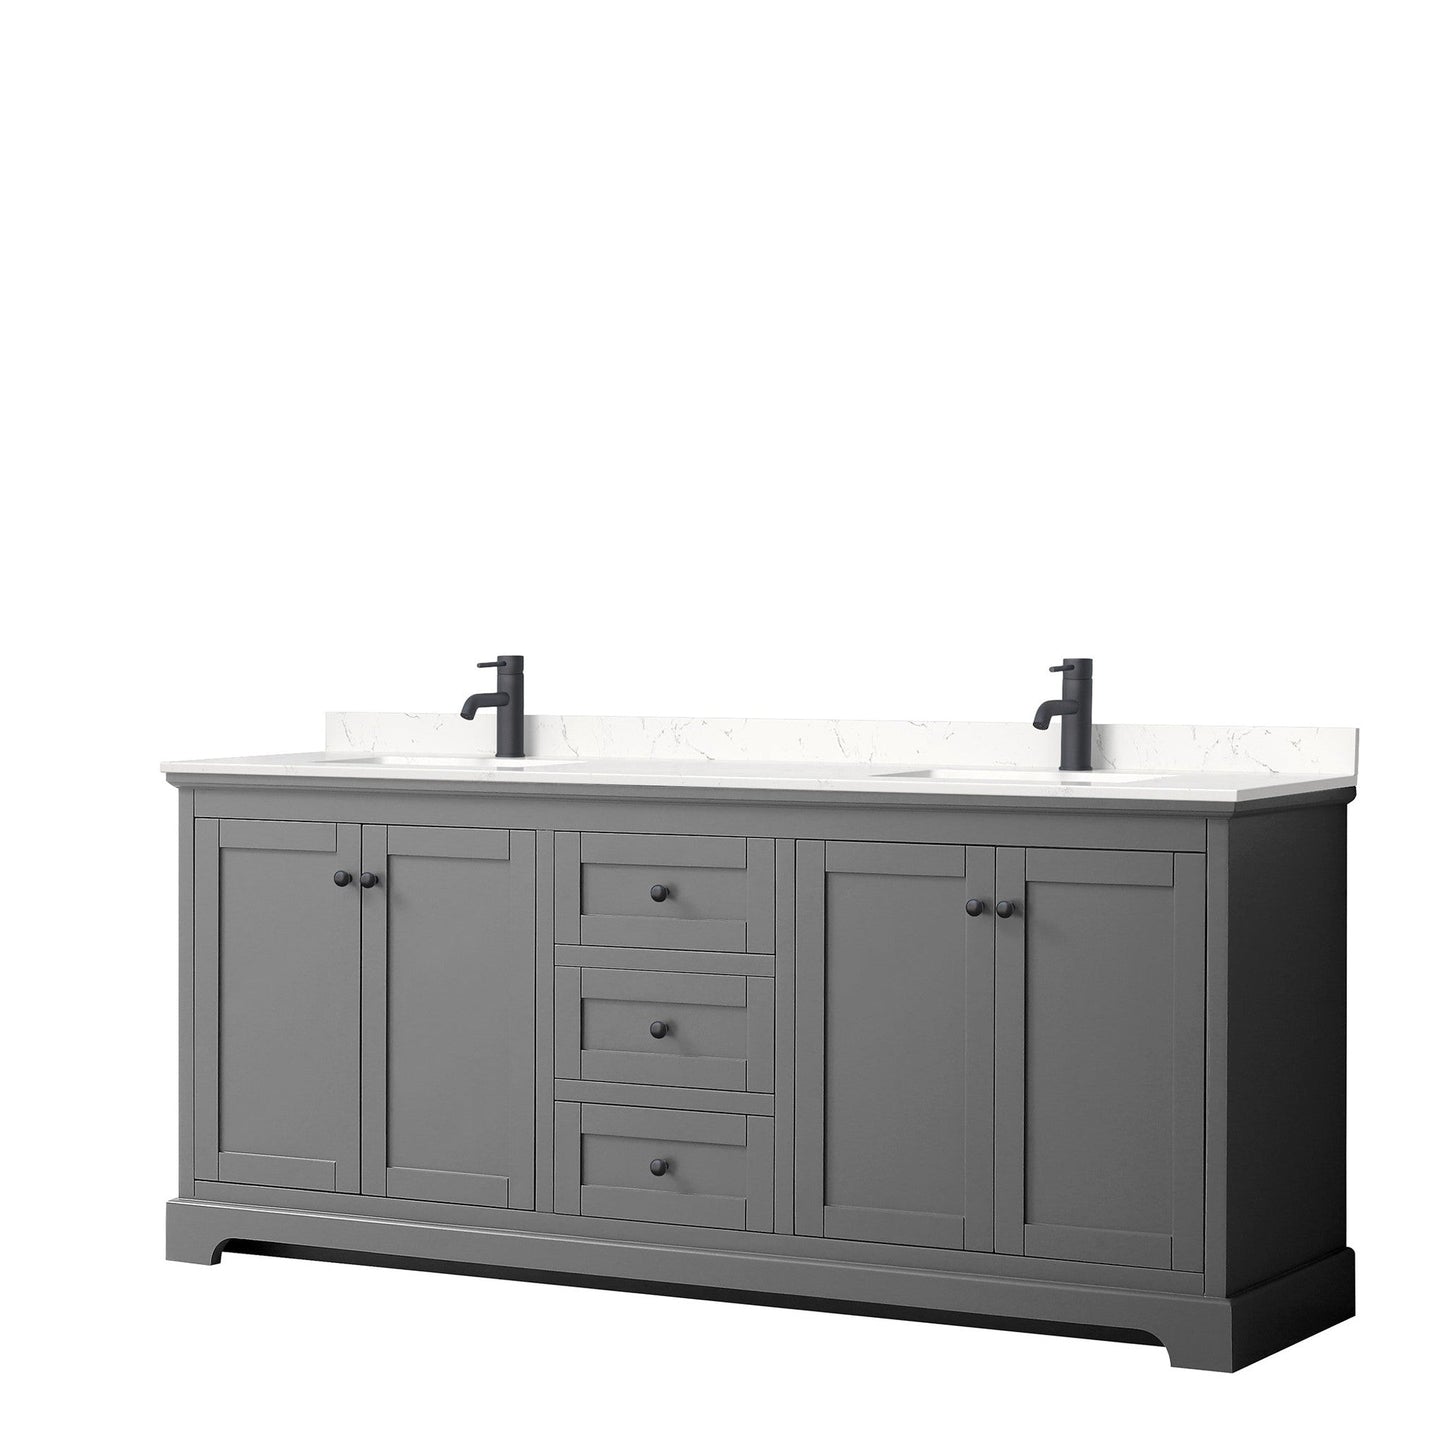 Avery 80" Double Bathroom Vanity in Dark Gray, Carrara Cultured Marble Countertop, Undermount Square Sinks, Matte Black Trim